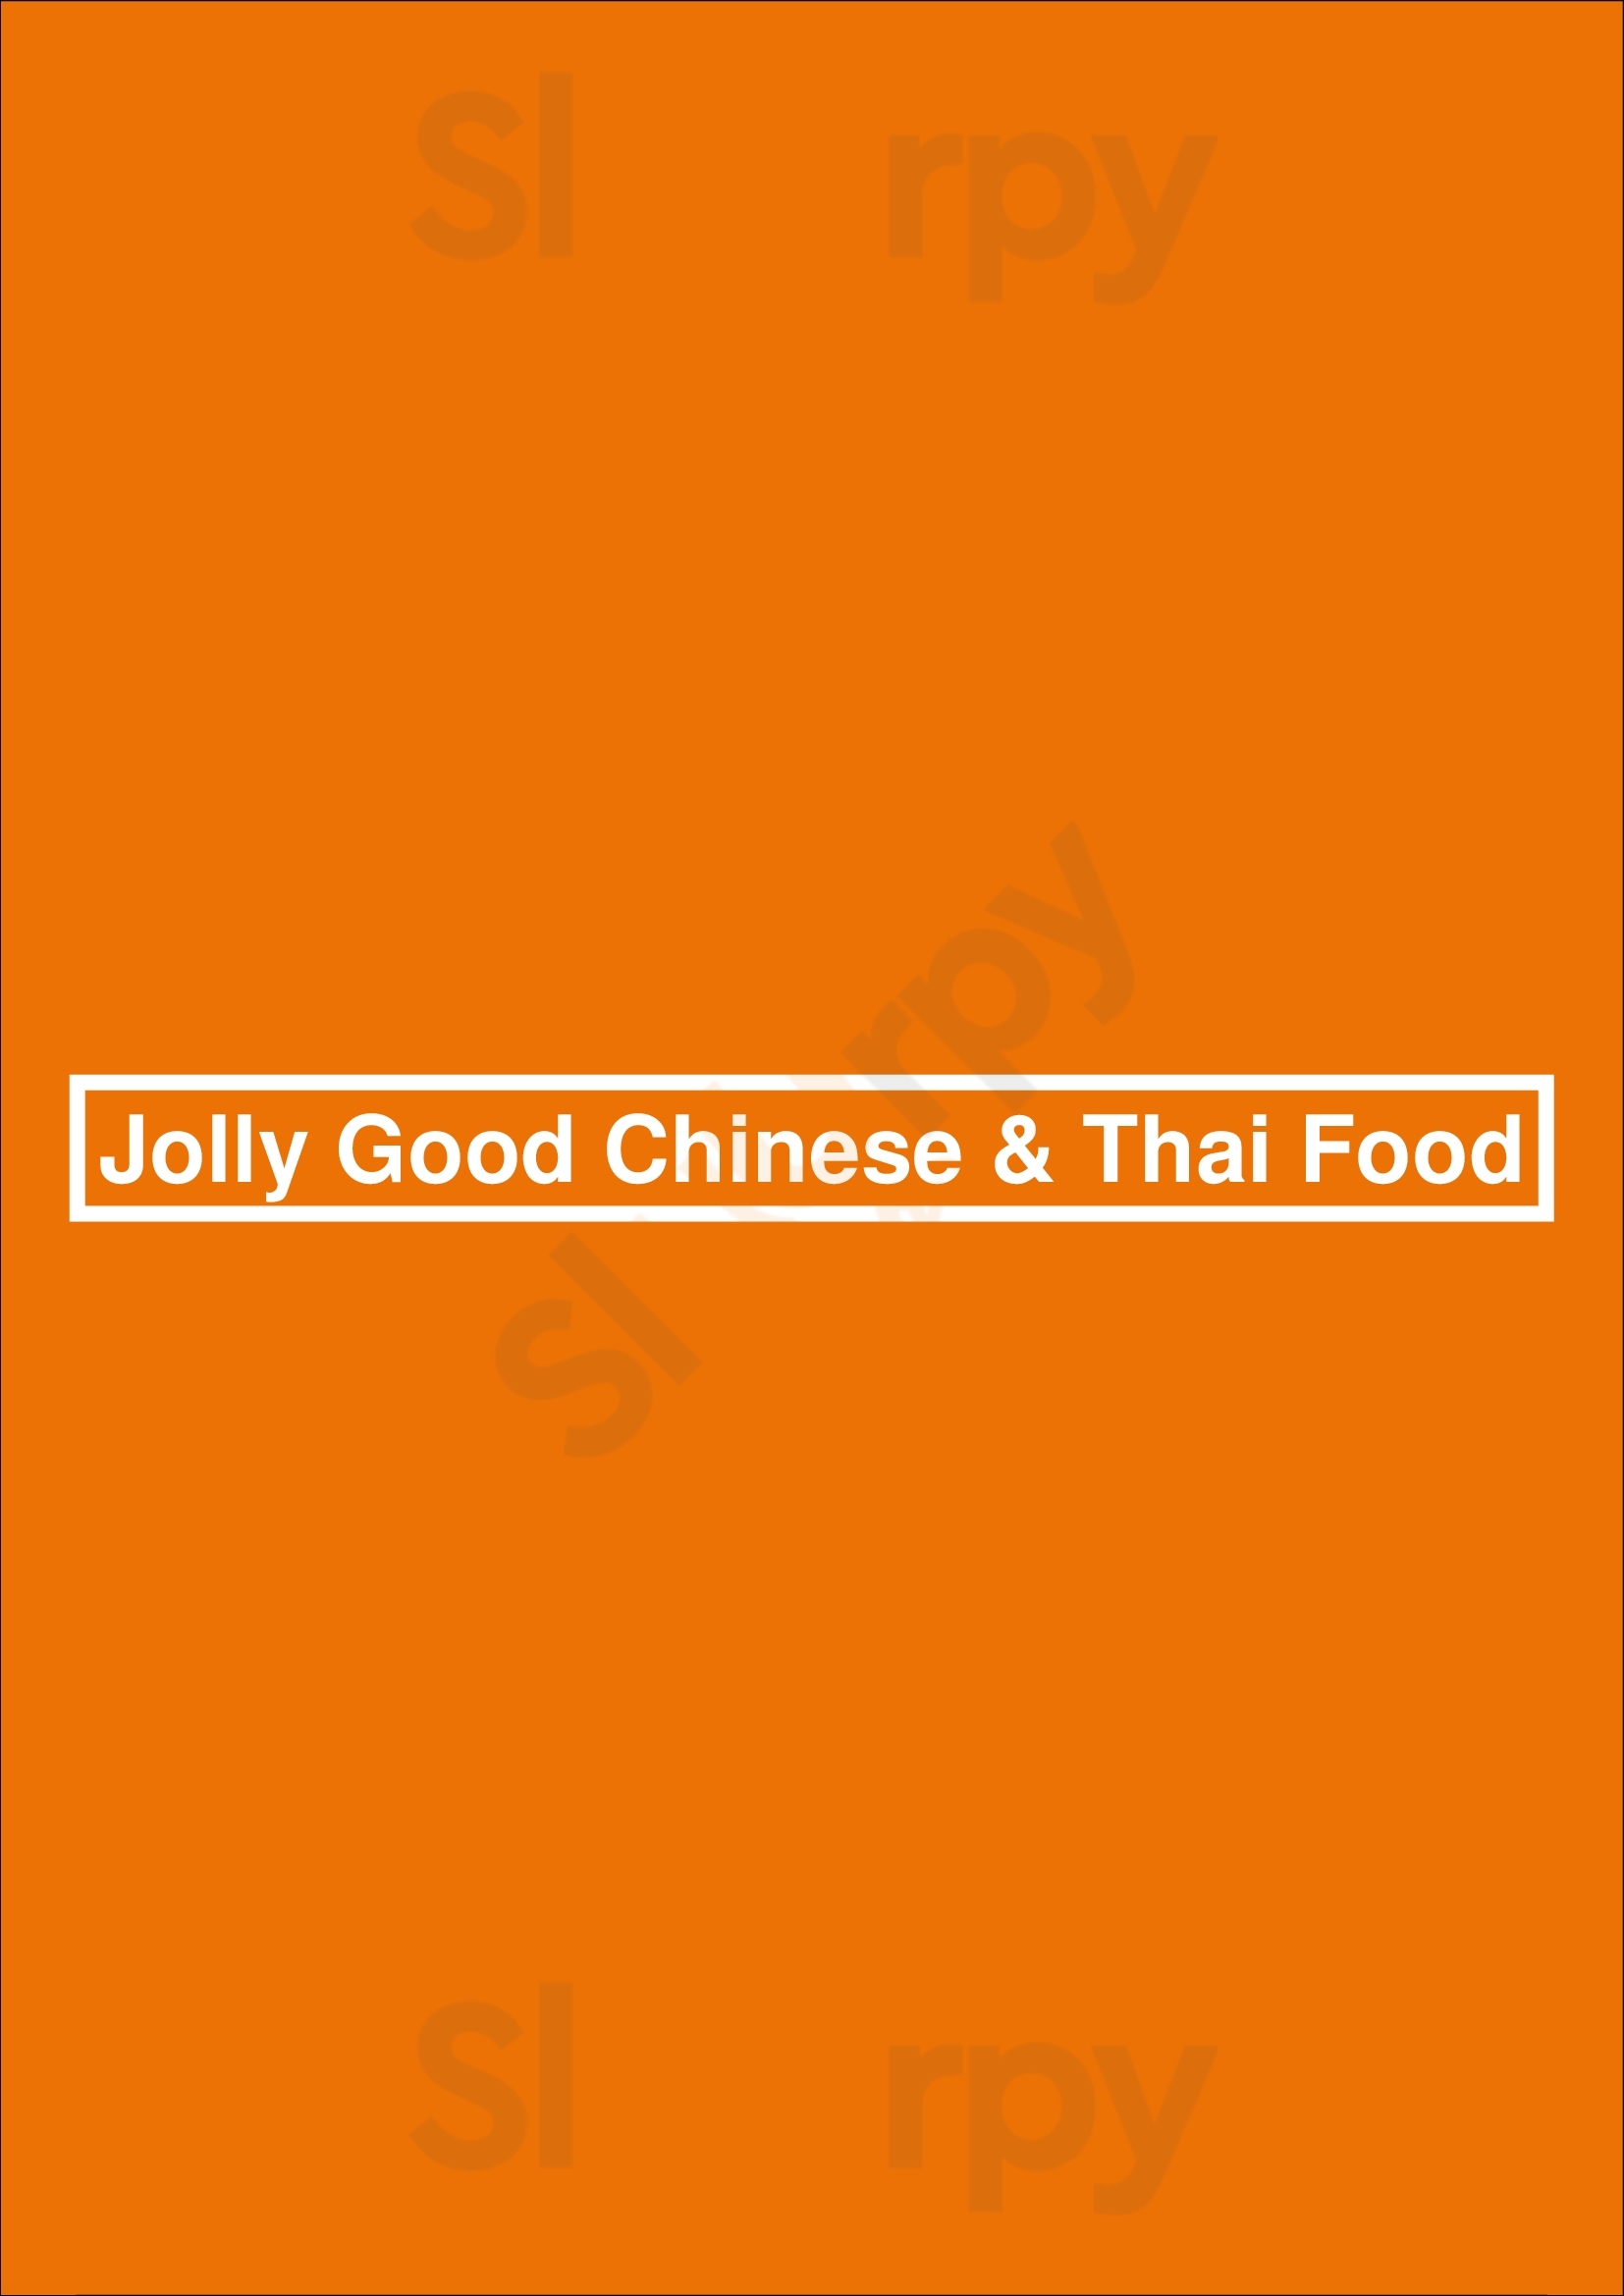 Jolly Good Chinese & Thai Food Calgary Menu - 1